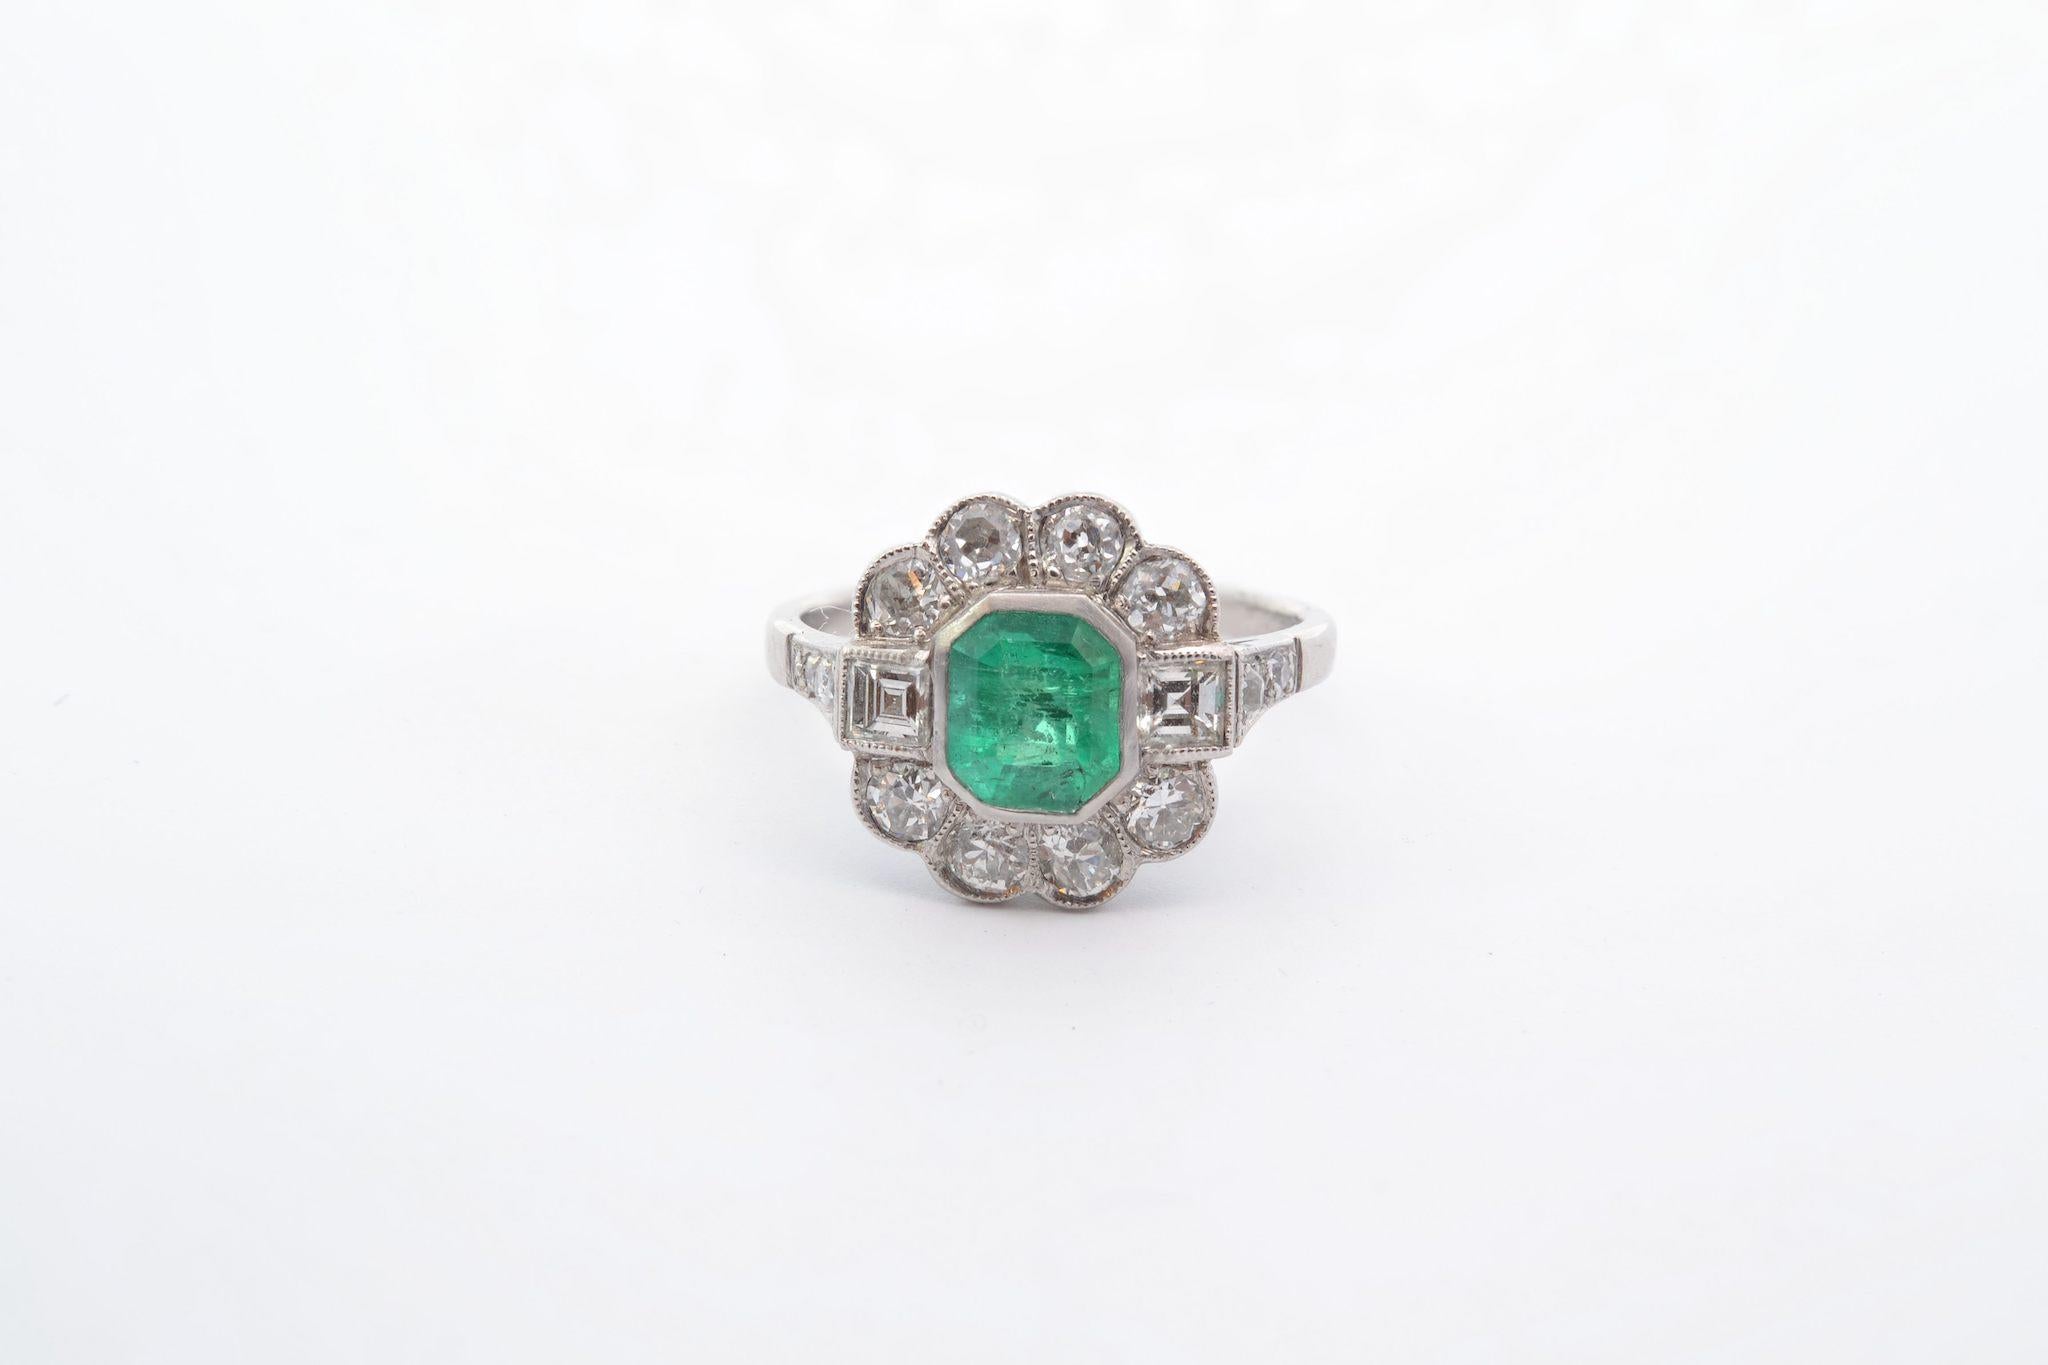 Stones: 1 emerald of 1.01ct, 14 diamonds: 0.85ct, 2 square diamonds: 0.25ct
Material: Platinum
Dimensions: 1.3cm x 1.2cm
Weight: 4.9g
Period: Art Deco style
Size: 53 (free sizing)
Certificate
Ref. : 25038 25160